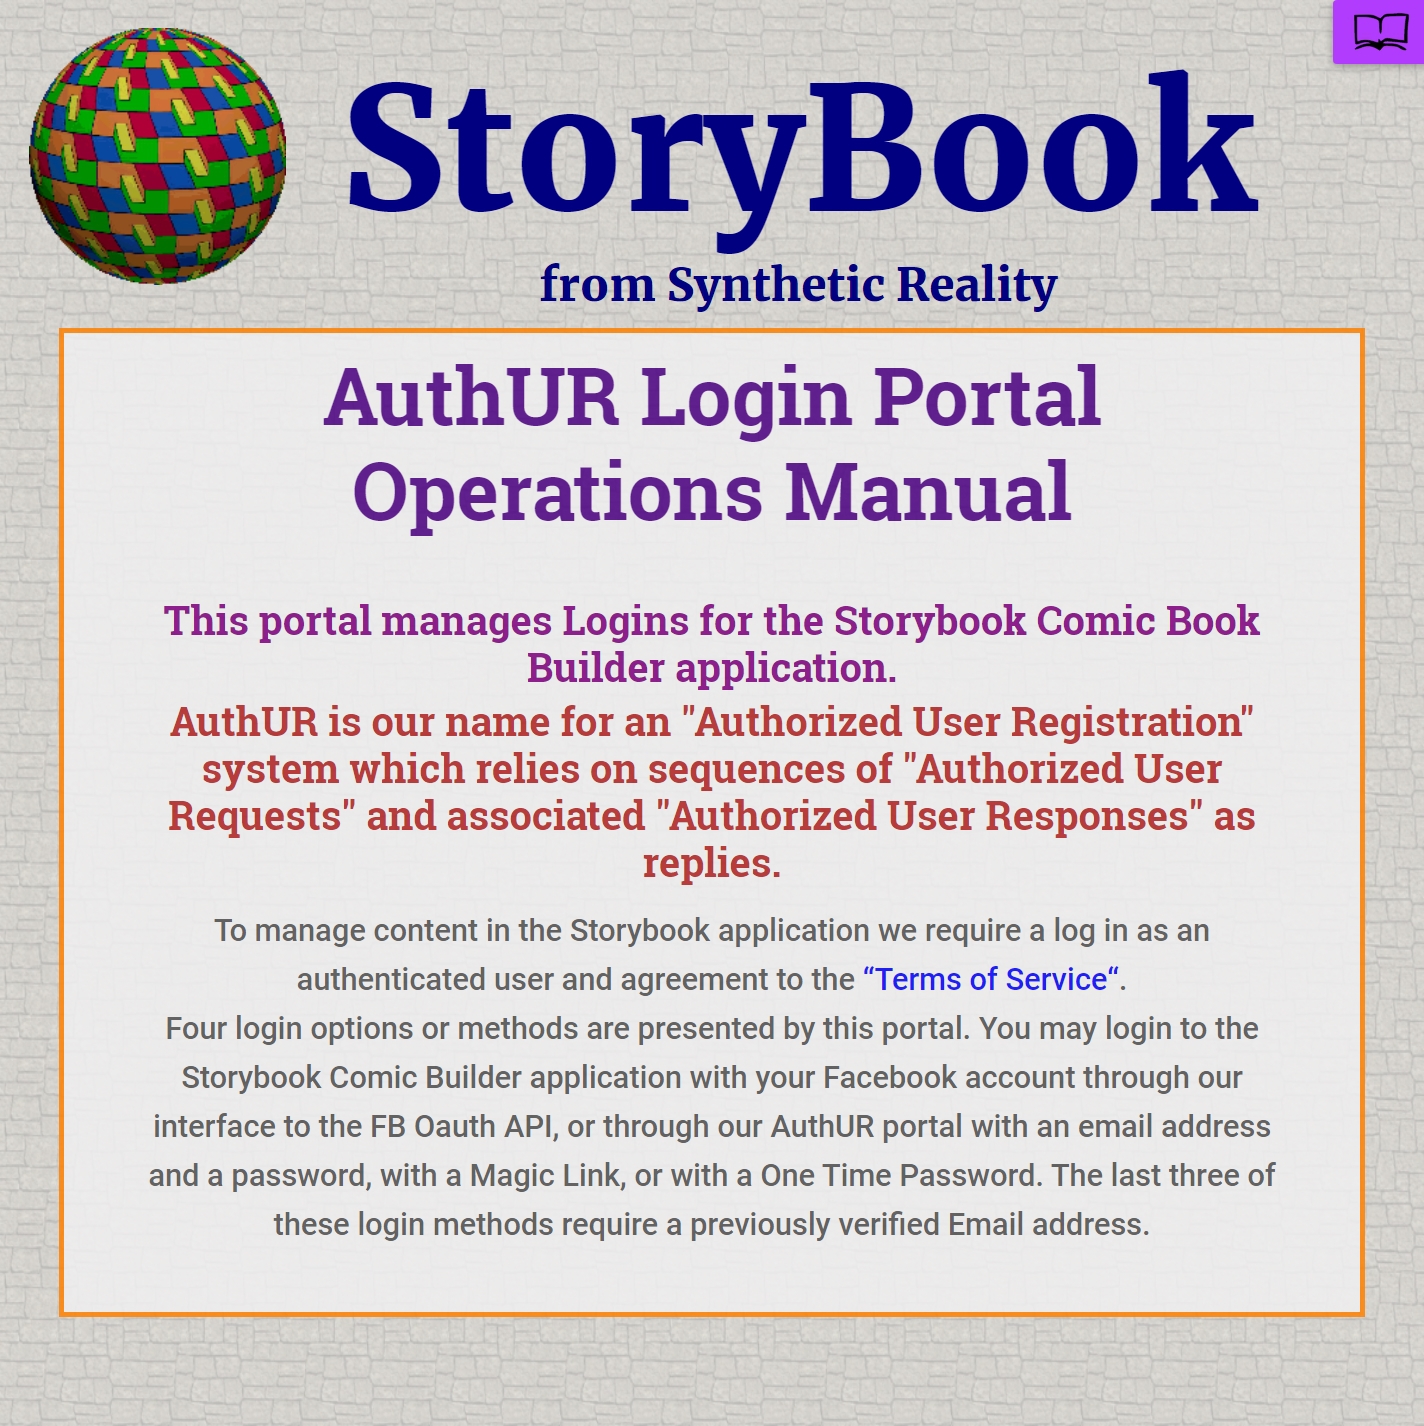 The introductory text description of the AuthUR Login Portal